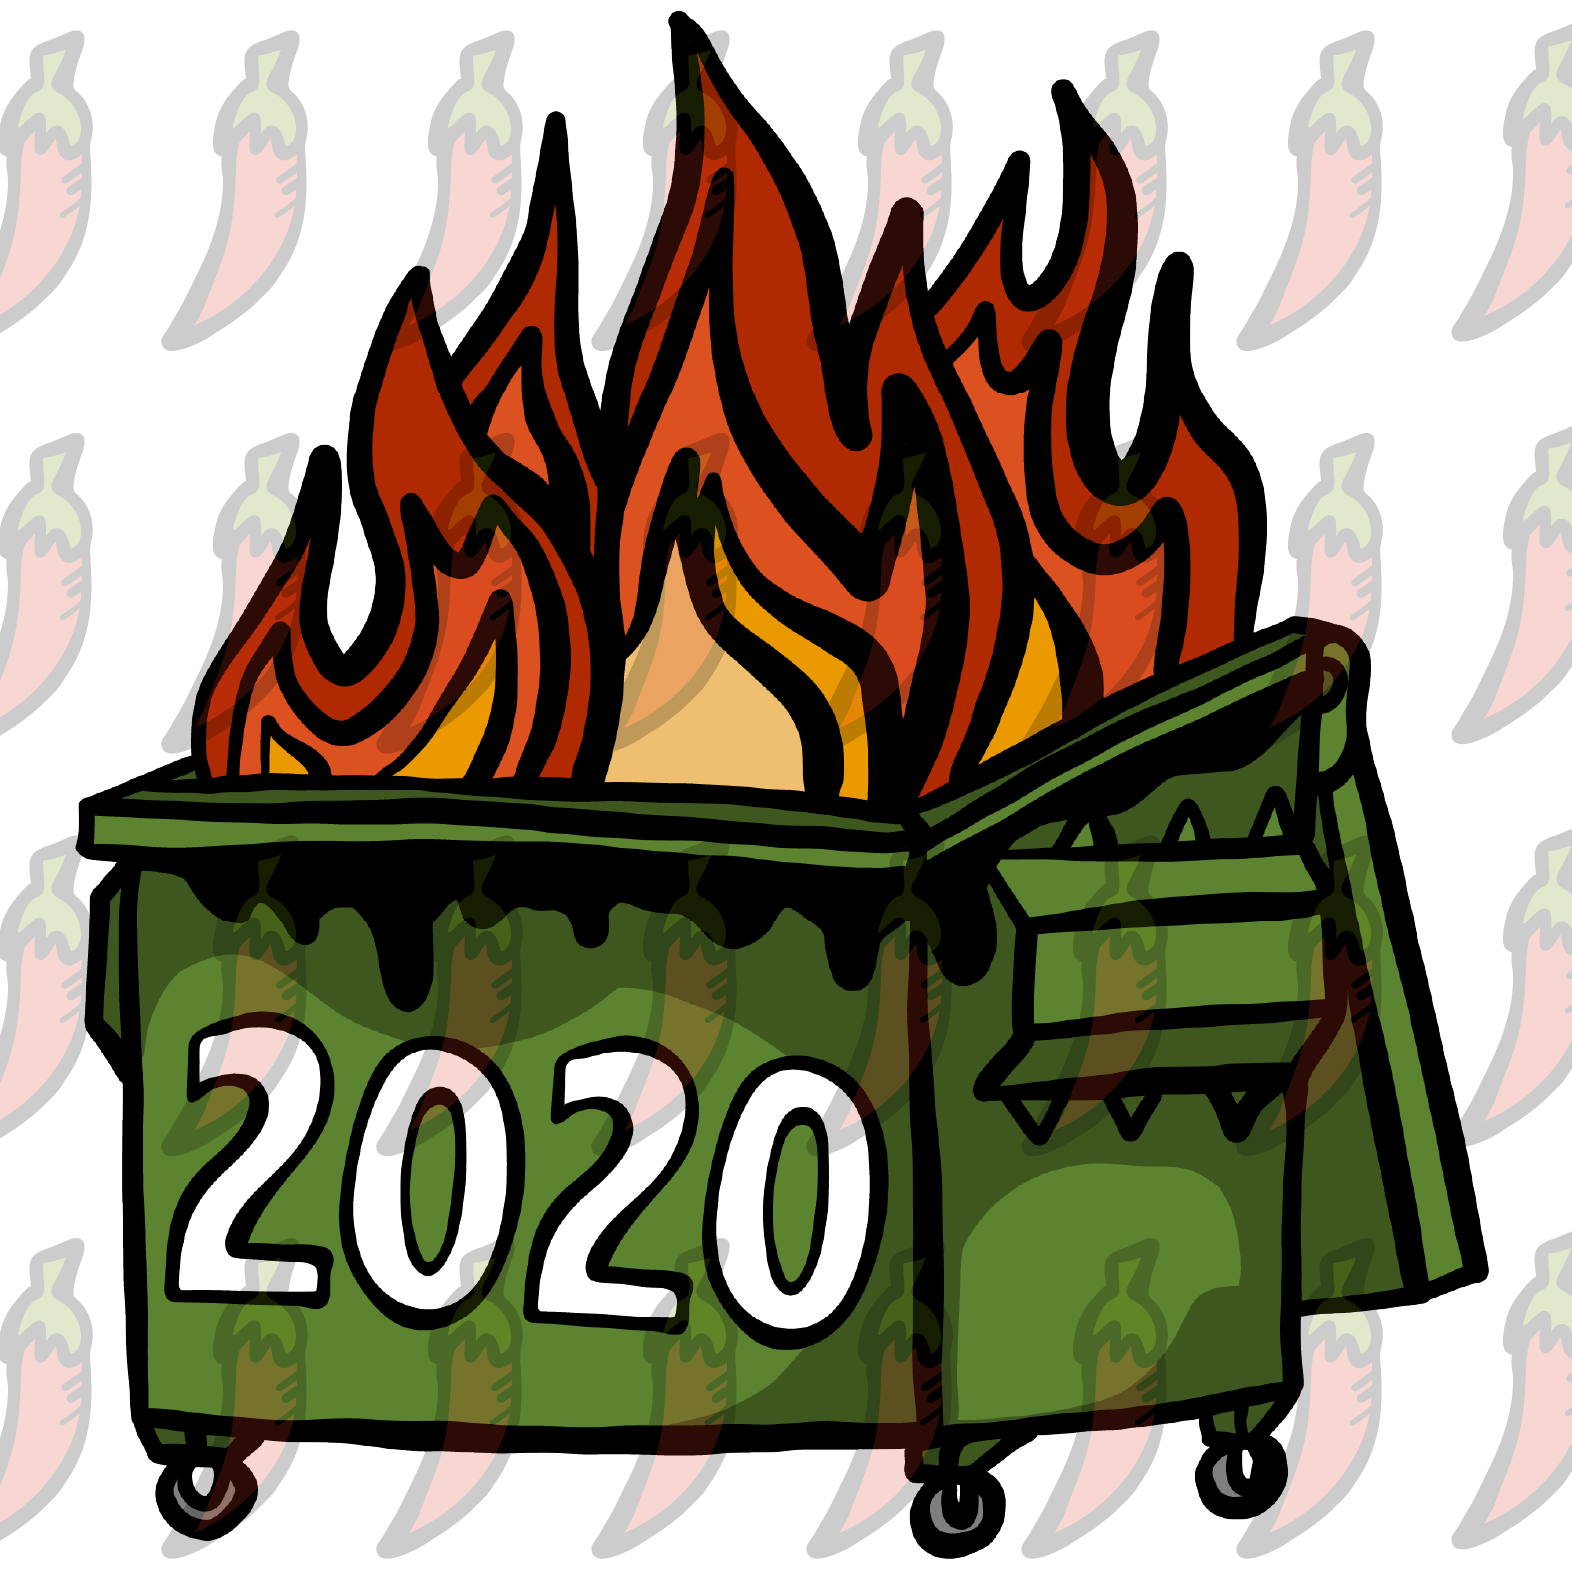 2020 Dumpster Fire 🗑️ - Unisex Hoodie